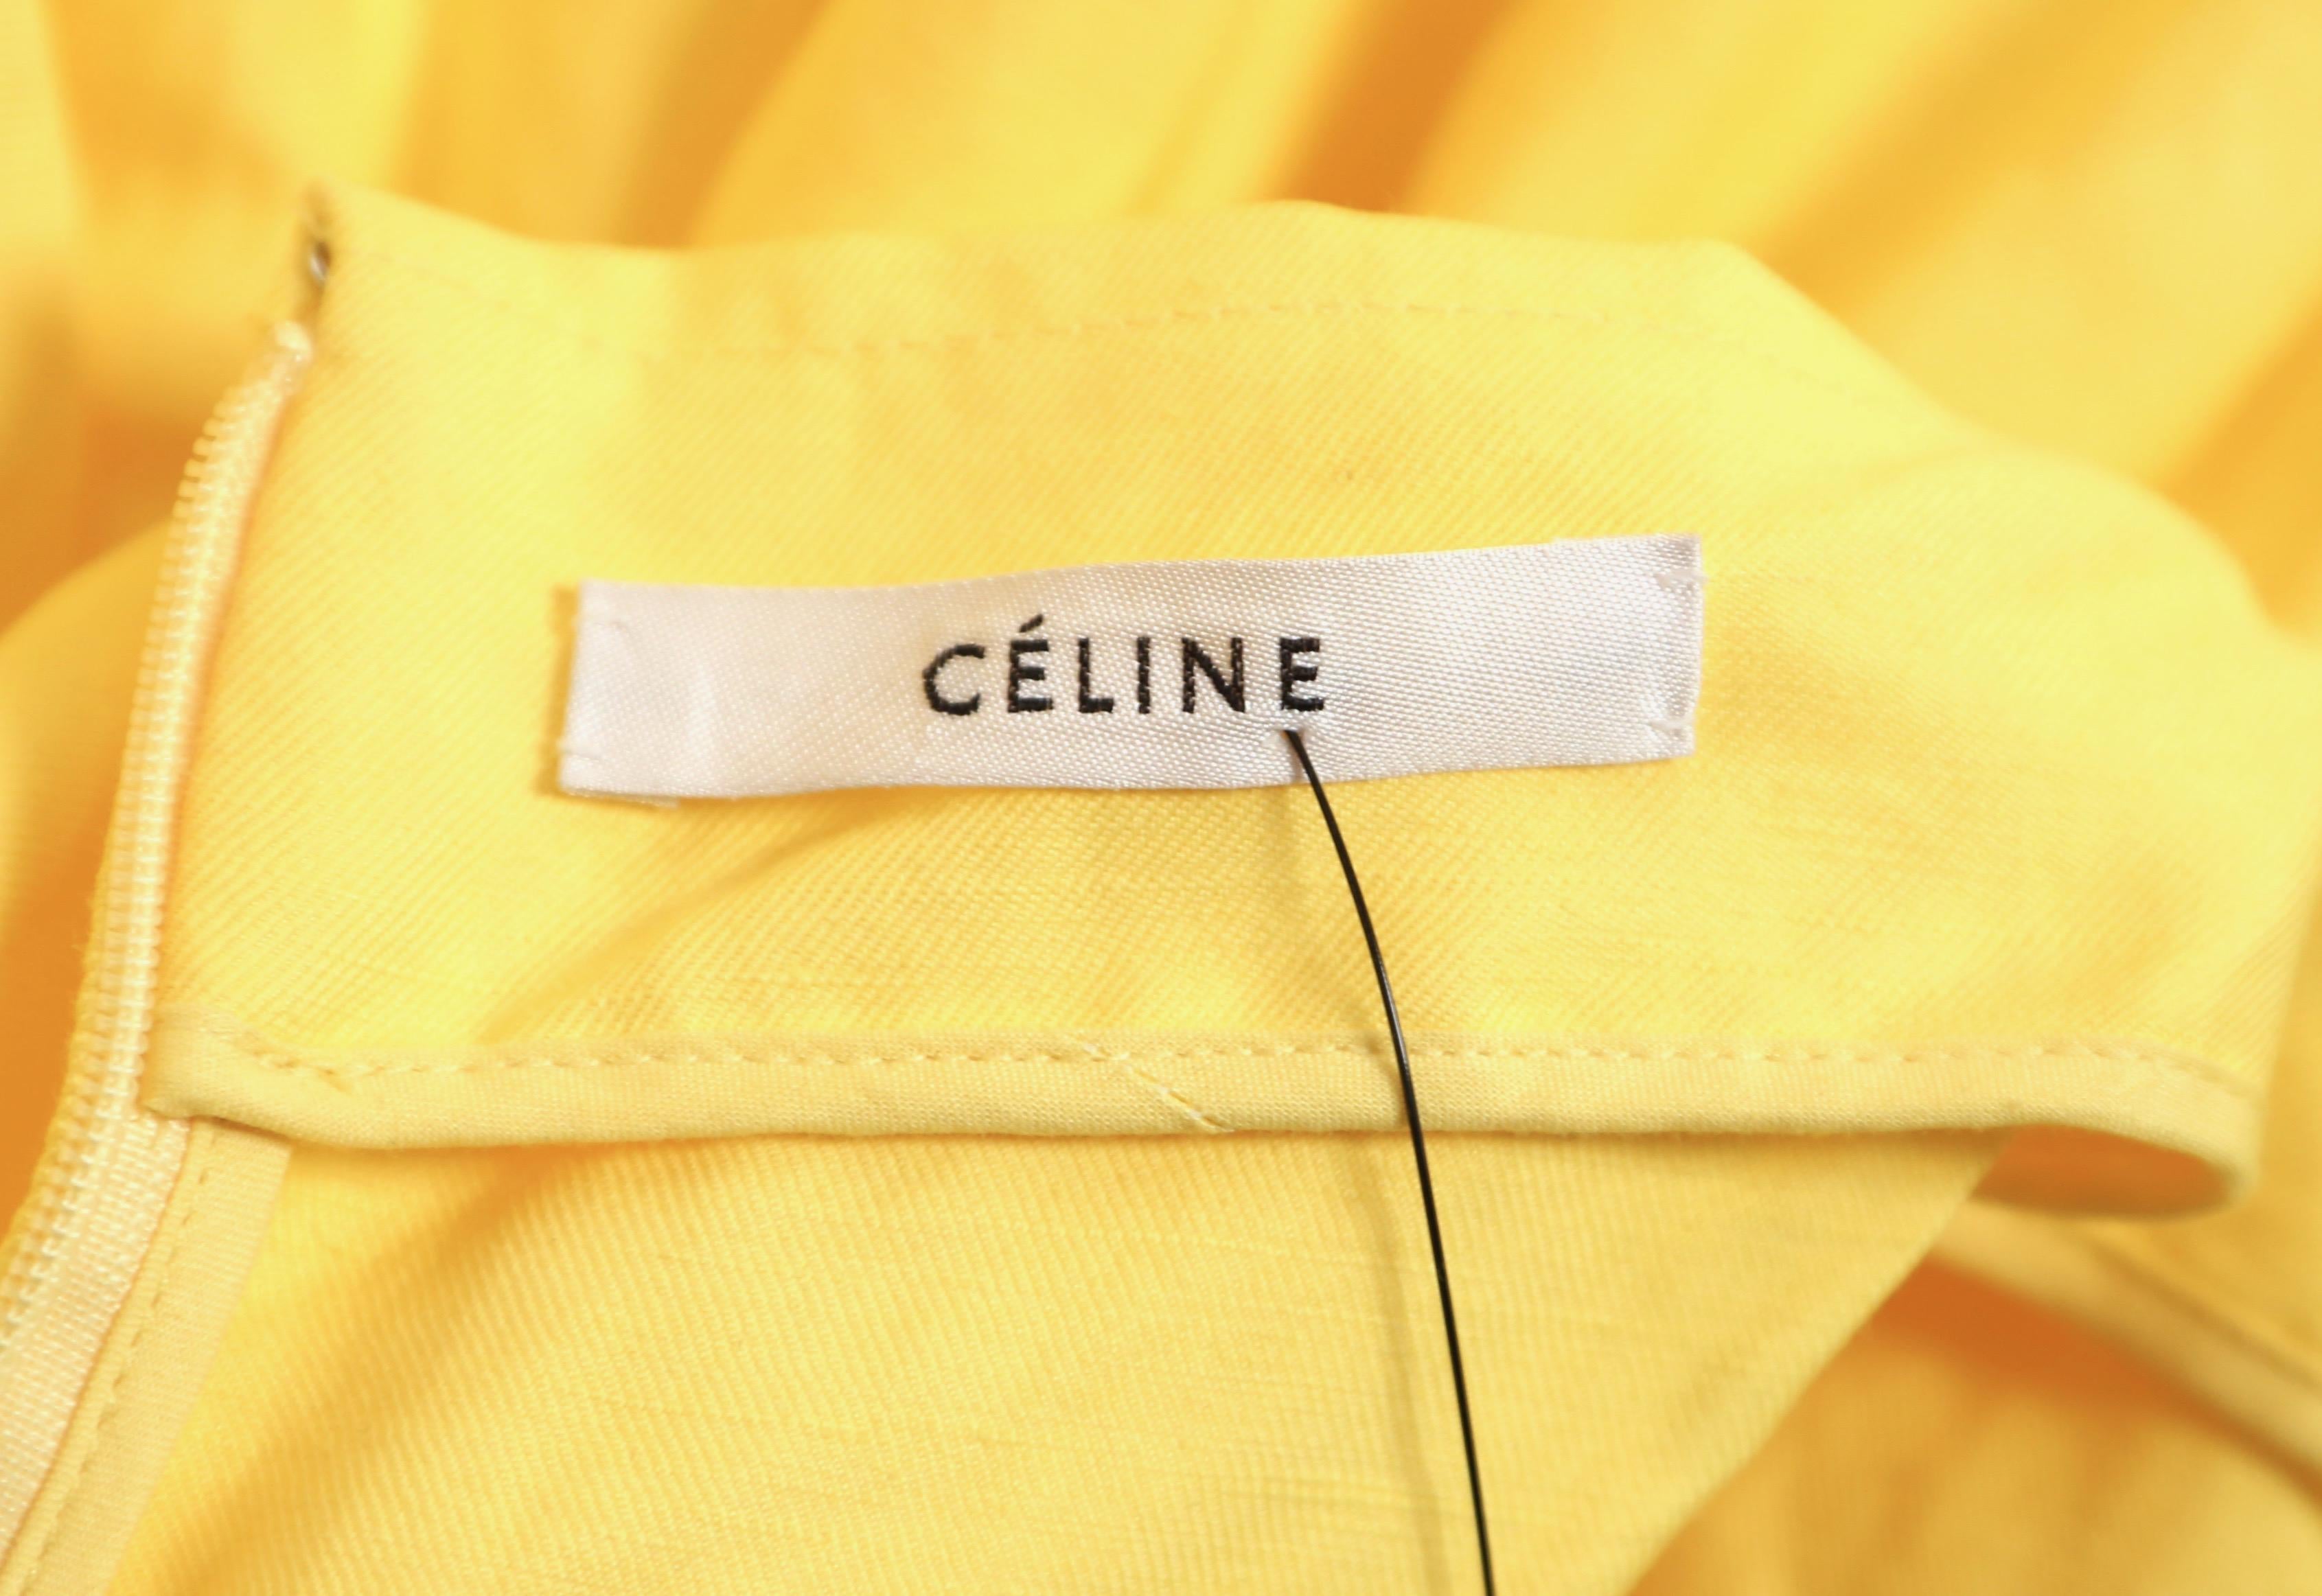 Women's or Men's 2018 CELINE by PHOEBE PHILO yellow linen maxi dress with cutout